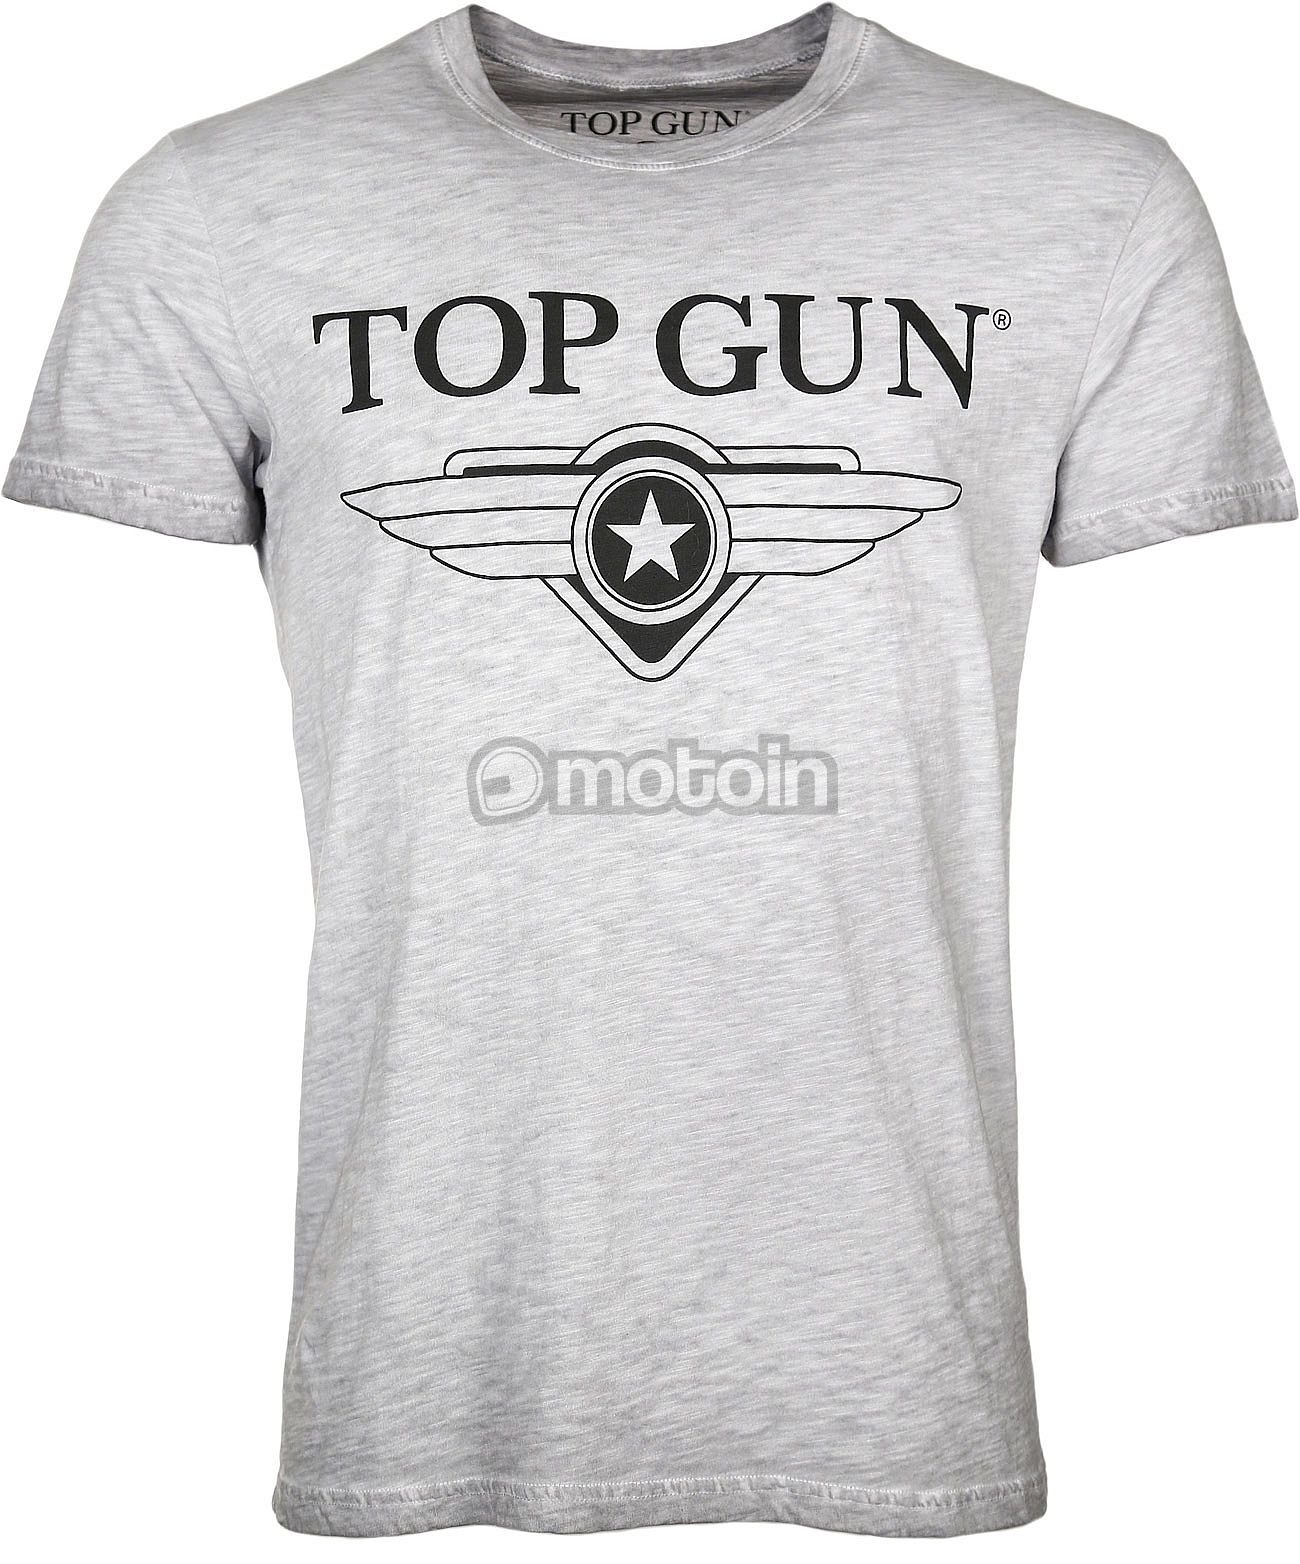 Top Gun Windy, camiseta